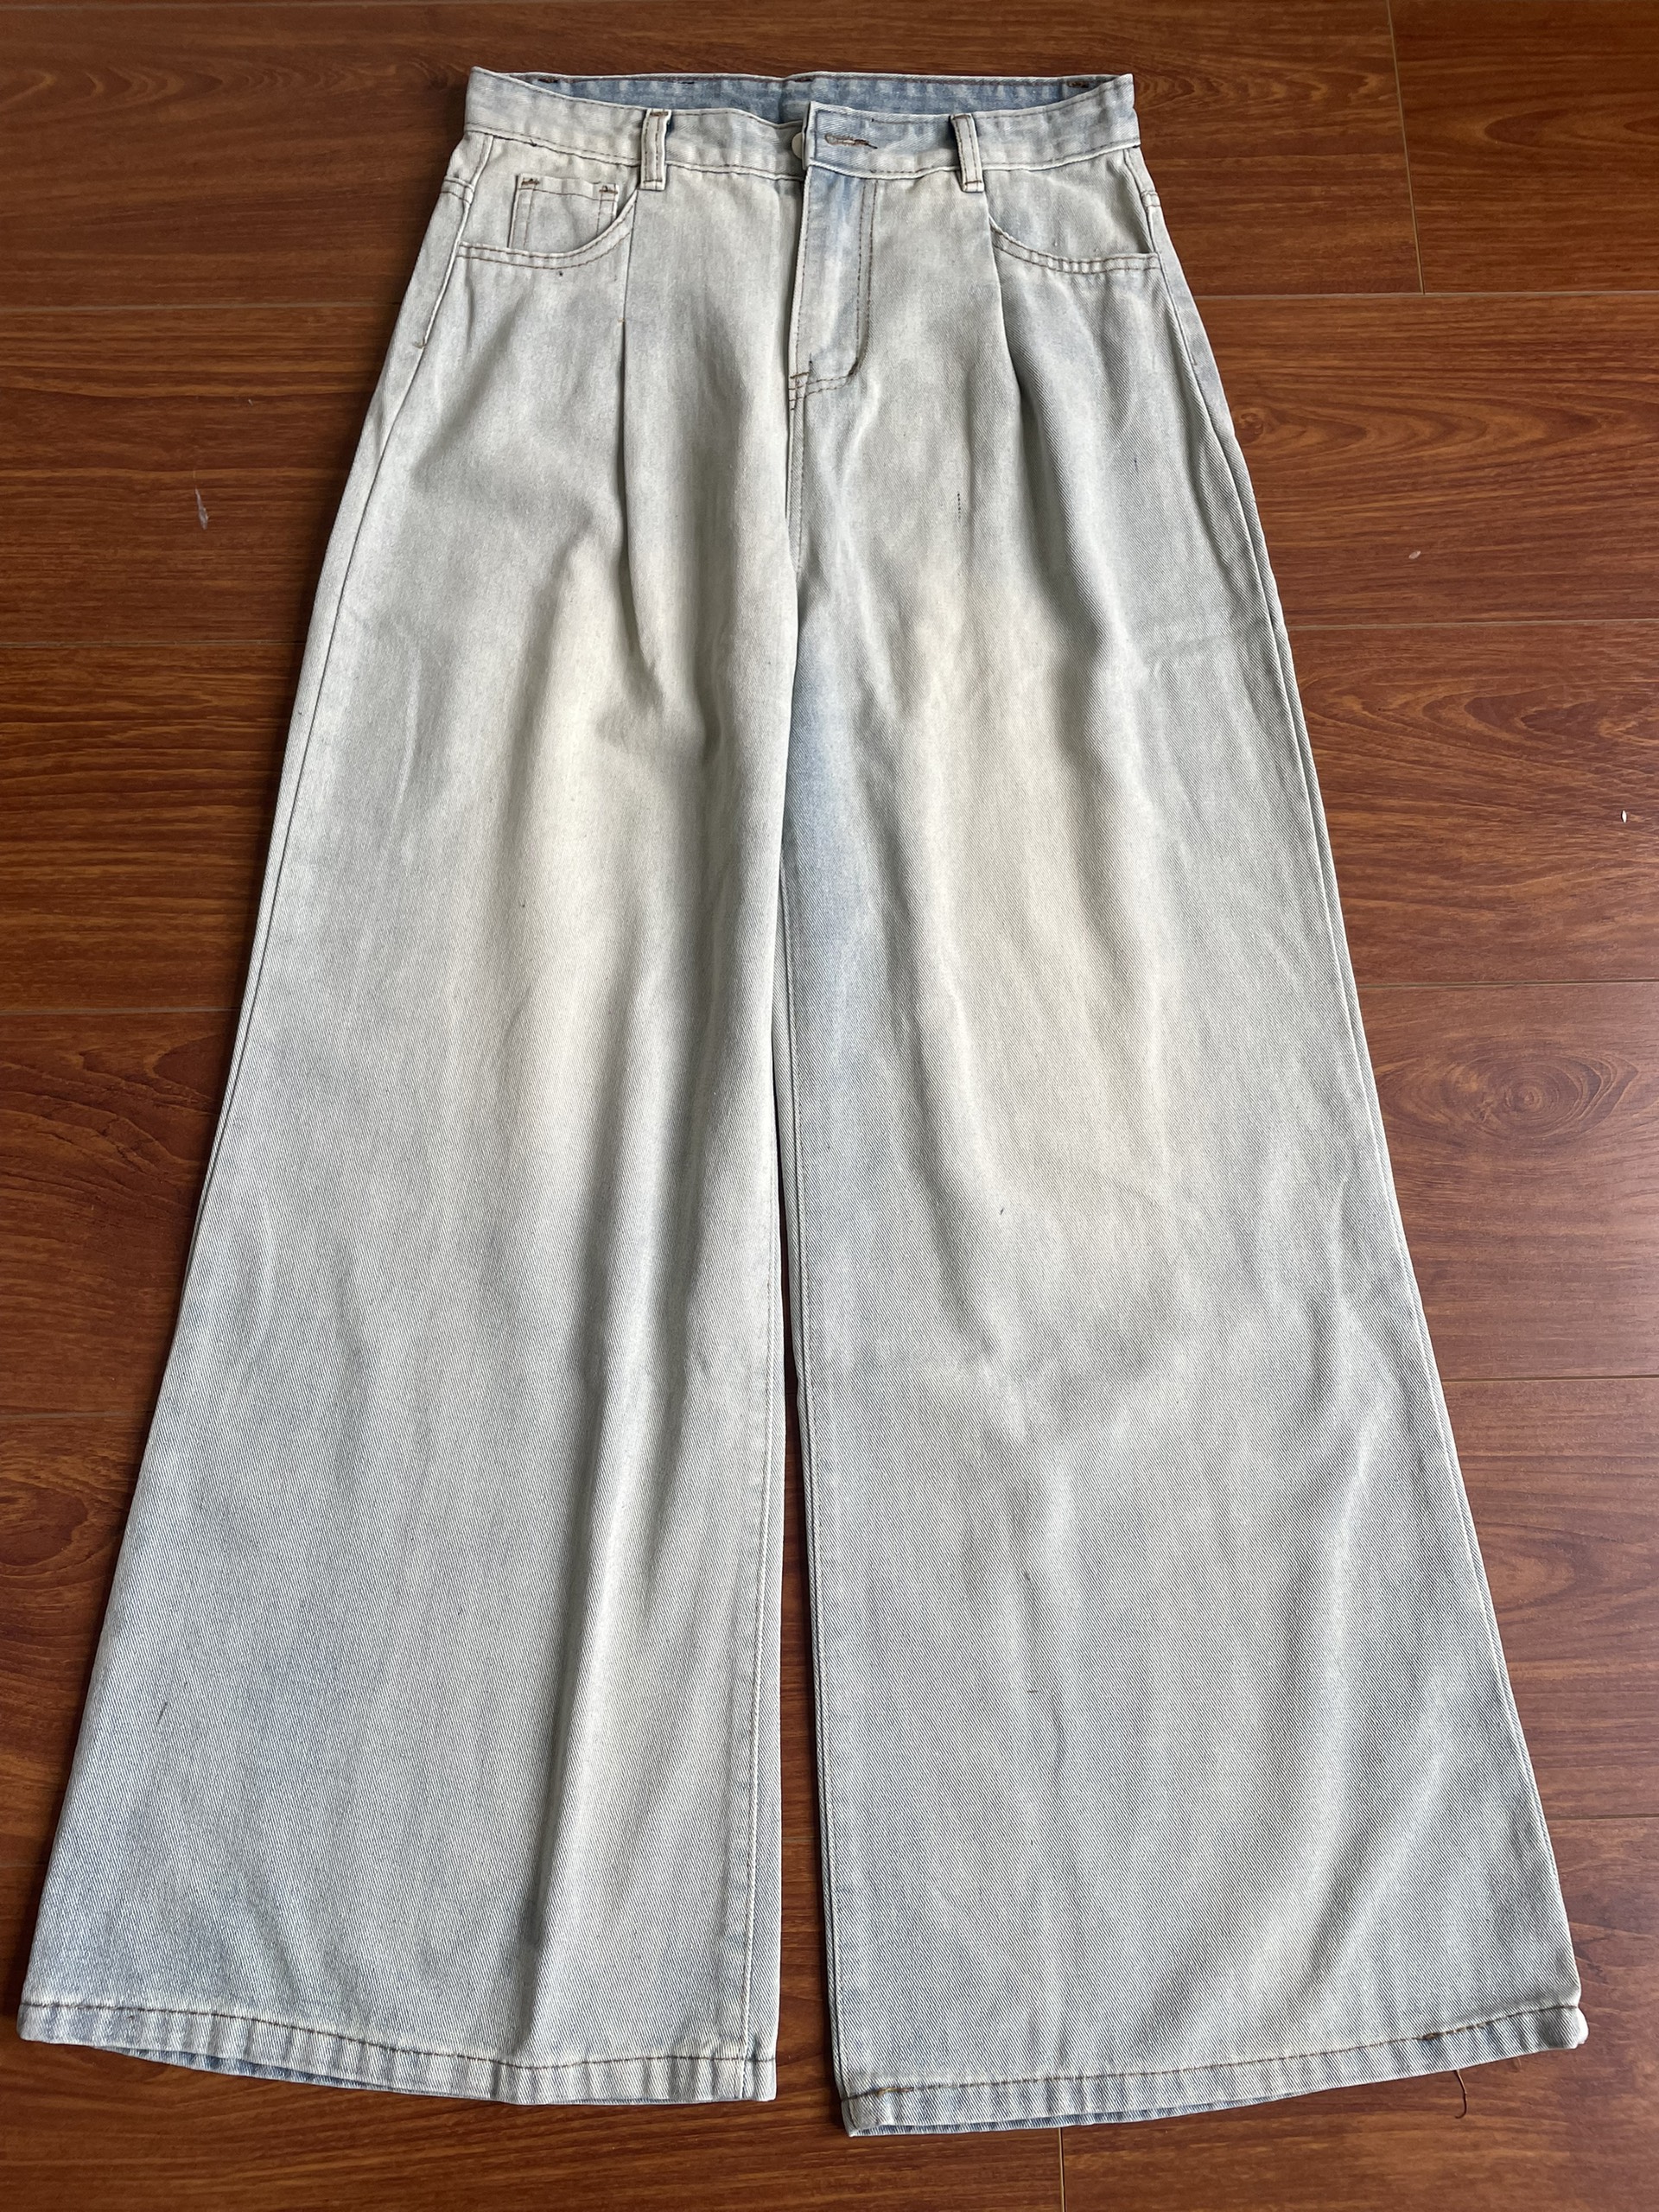 Quần jeans xanh bạc ánh rêu Jean7622